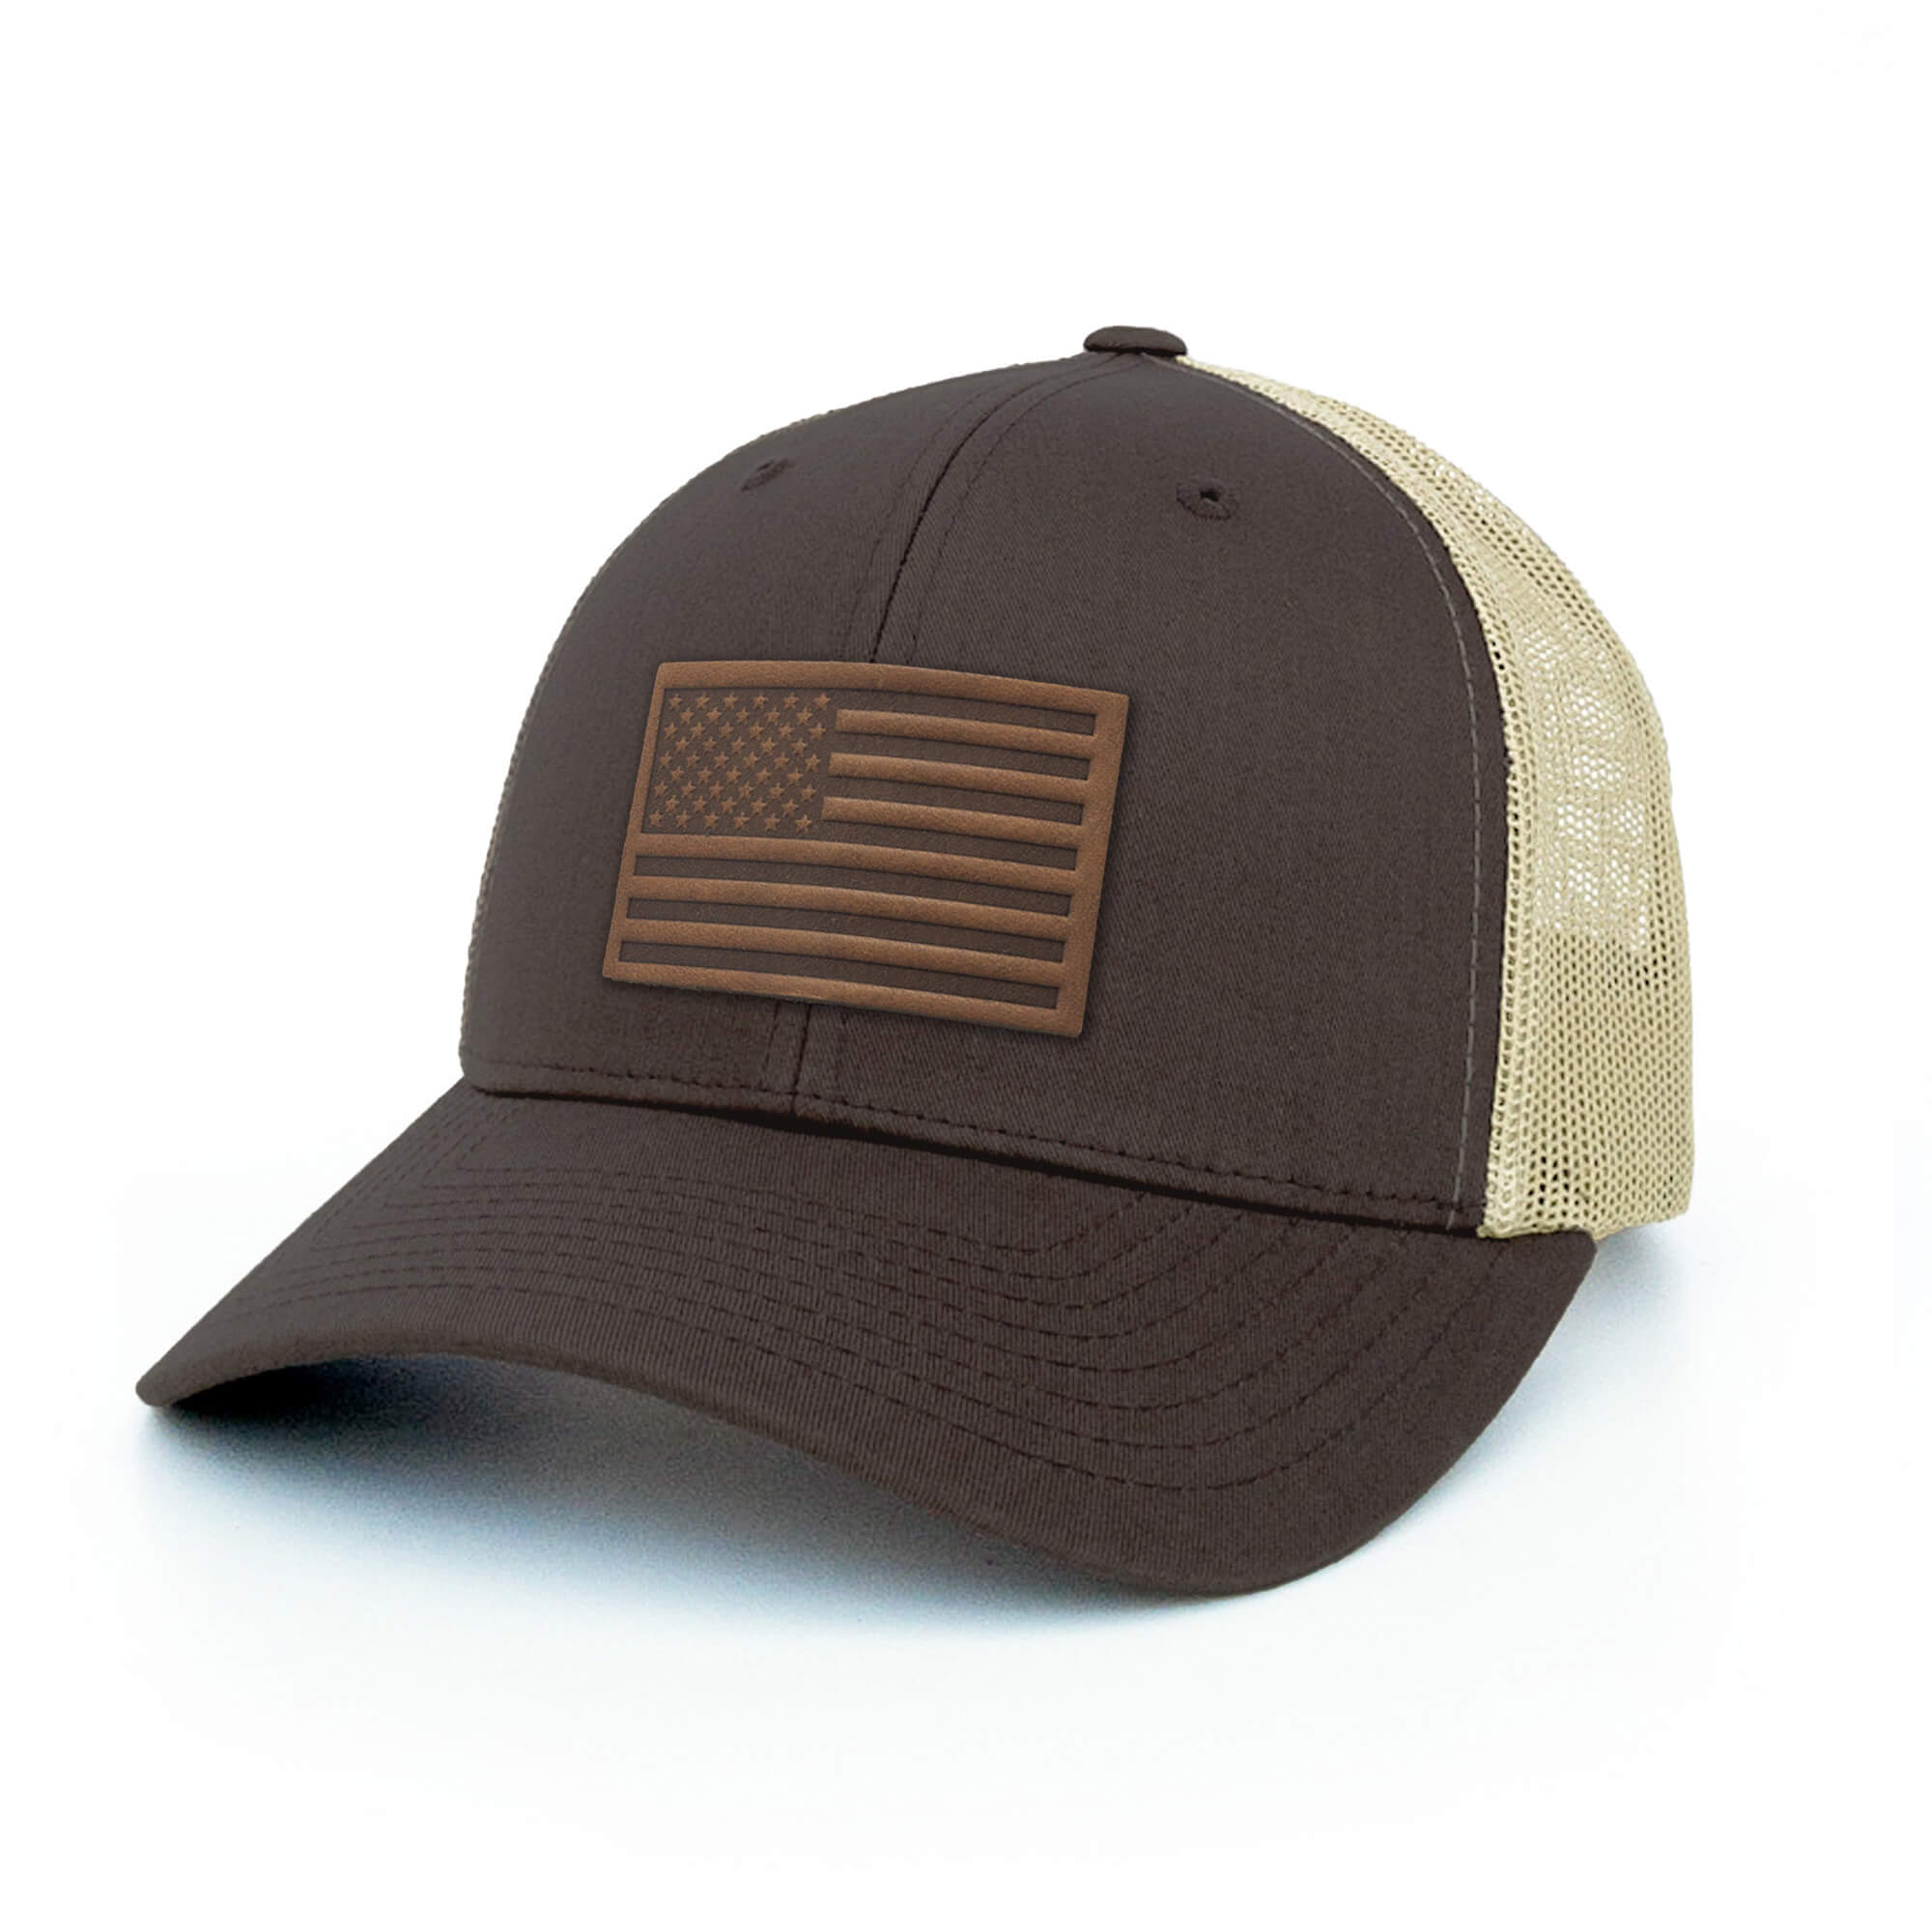 Pnkvnlo Fishing Hat for Men - American Flag Hats Patriotic Leather